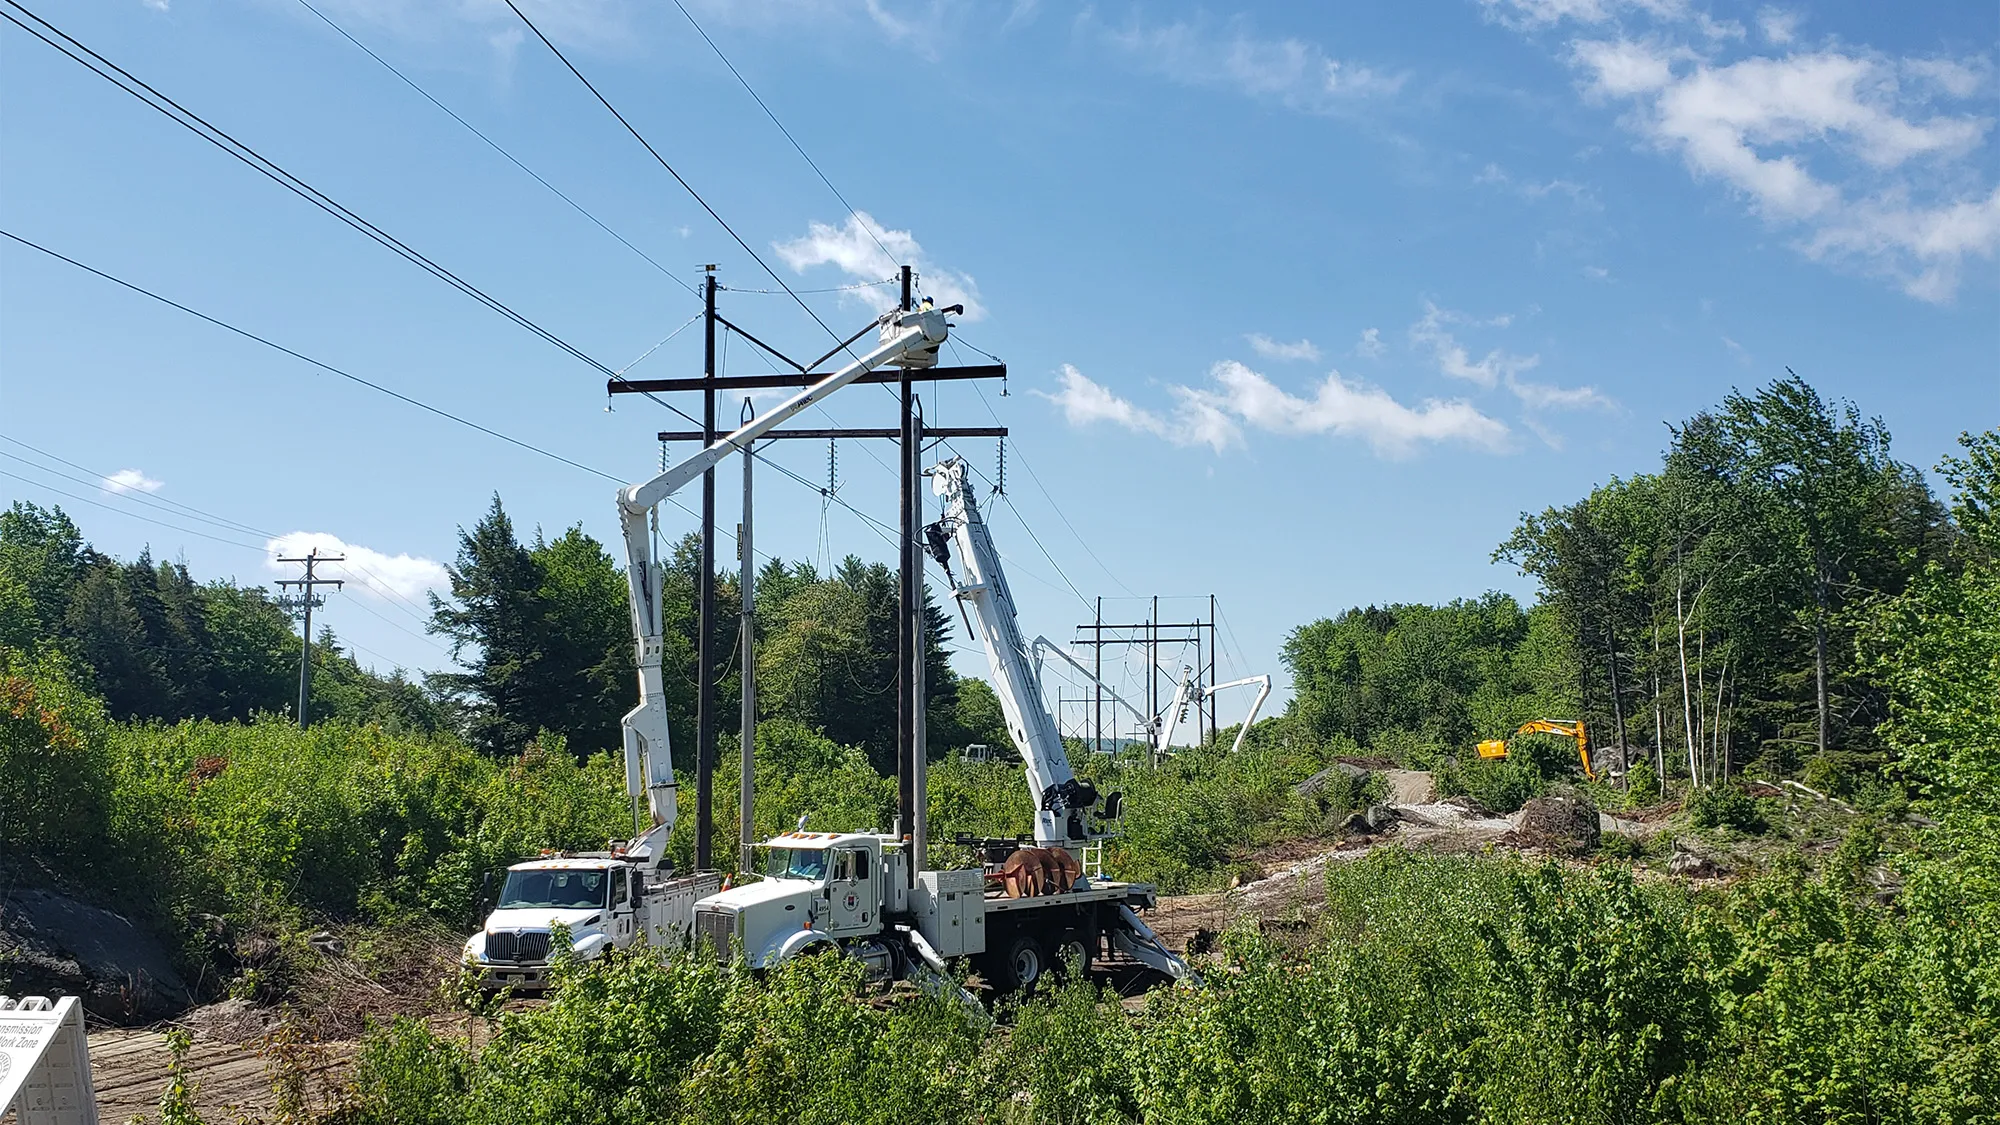 Workers rebuilding transmission line poles